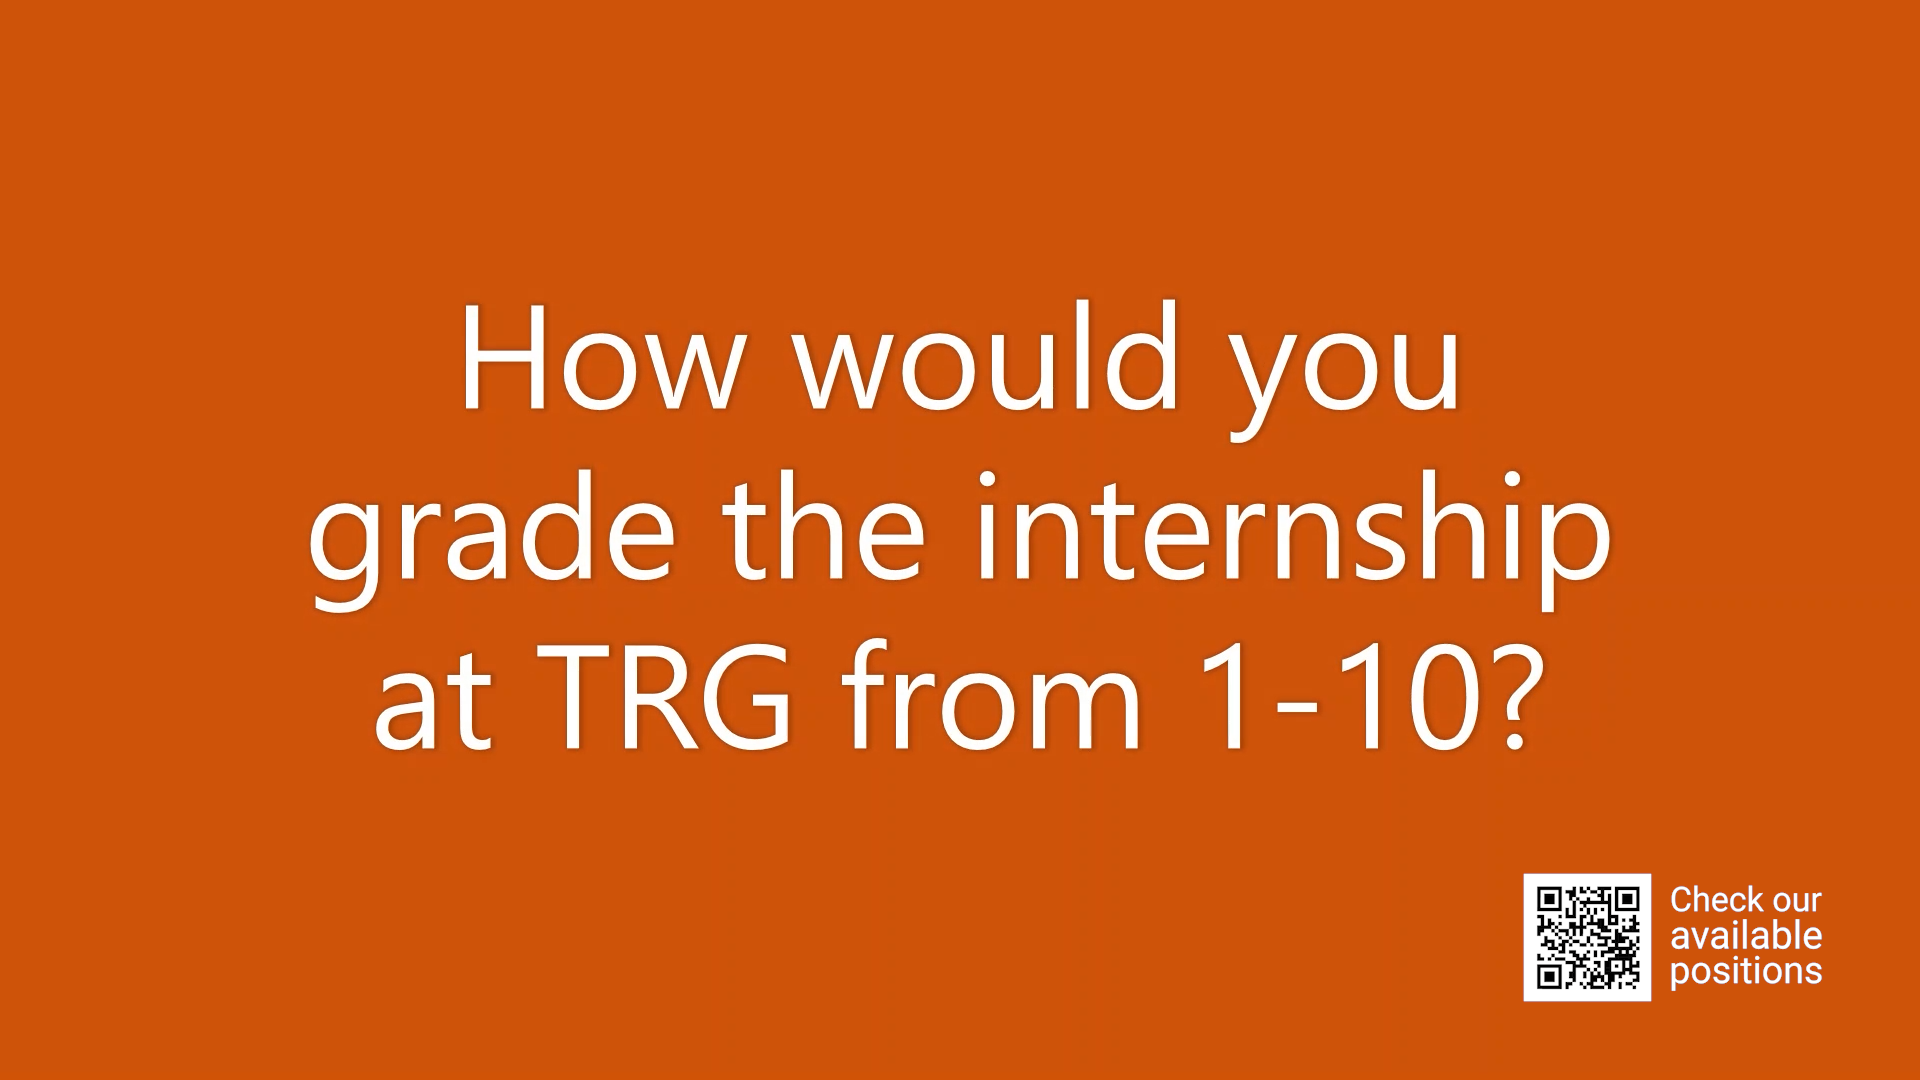 Internship testimonials - Episode 8: Rating internship experience at TRG